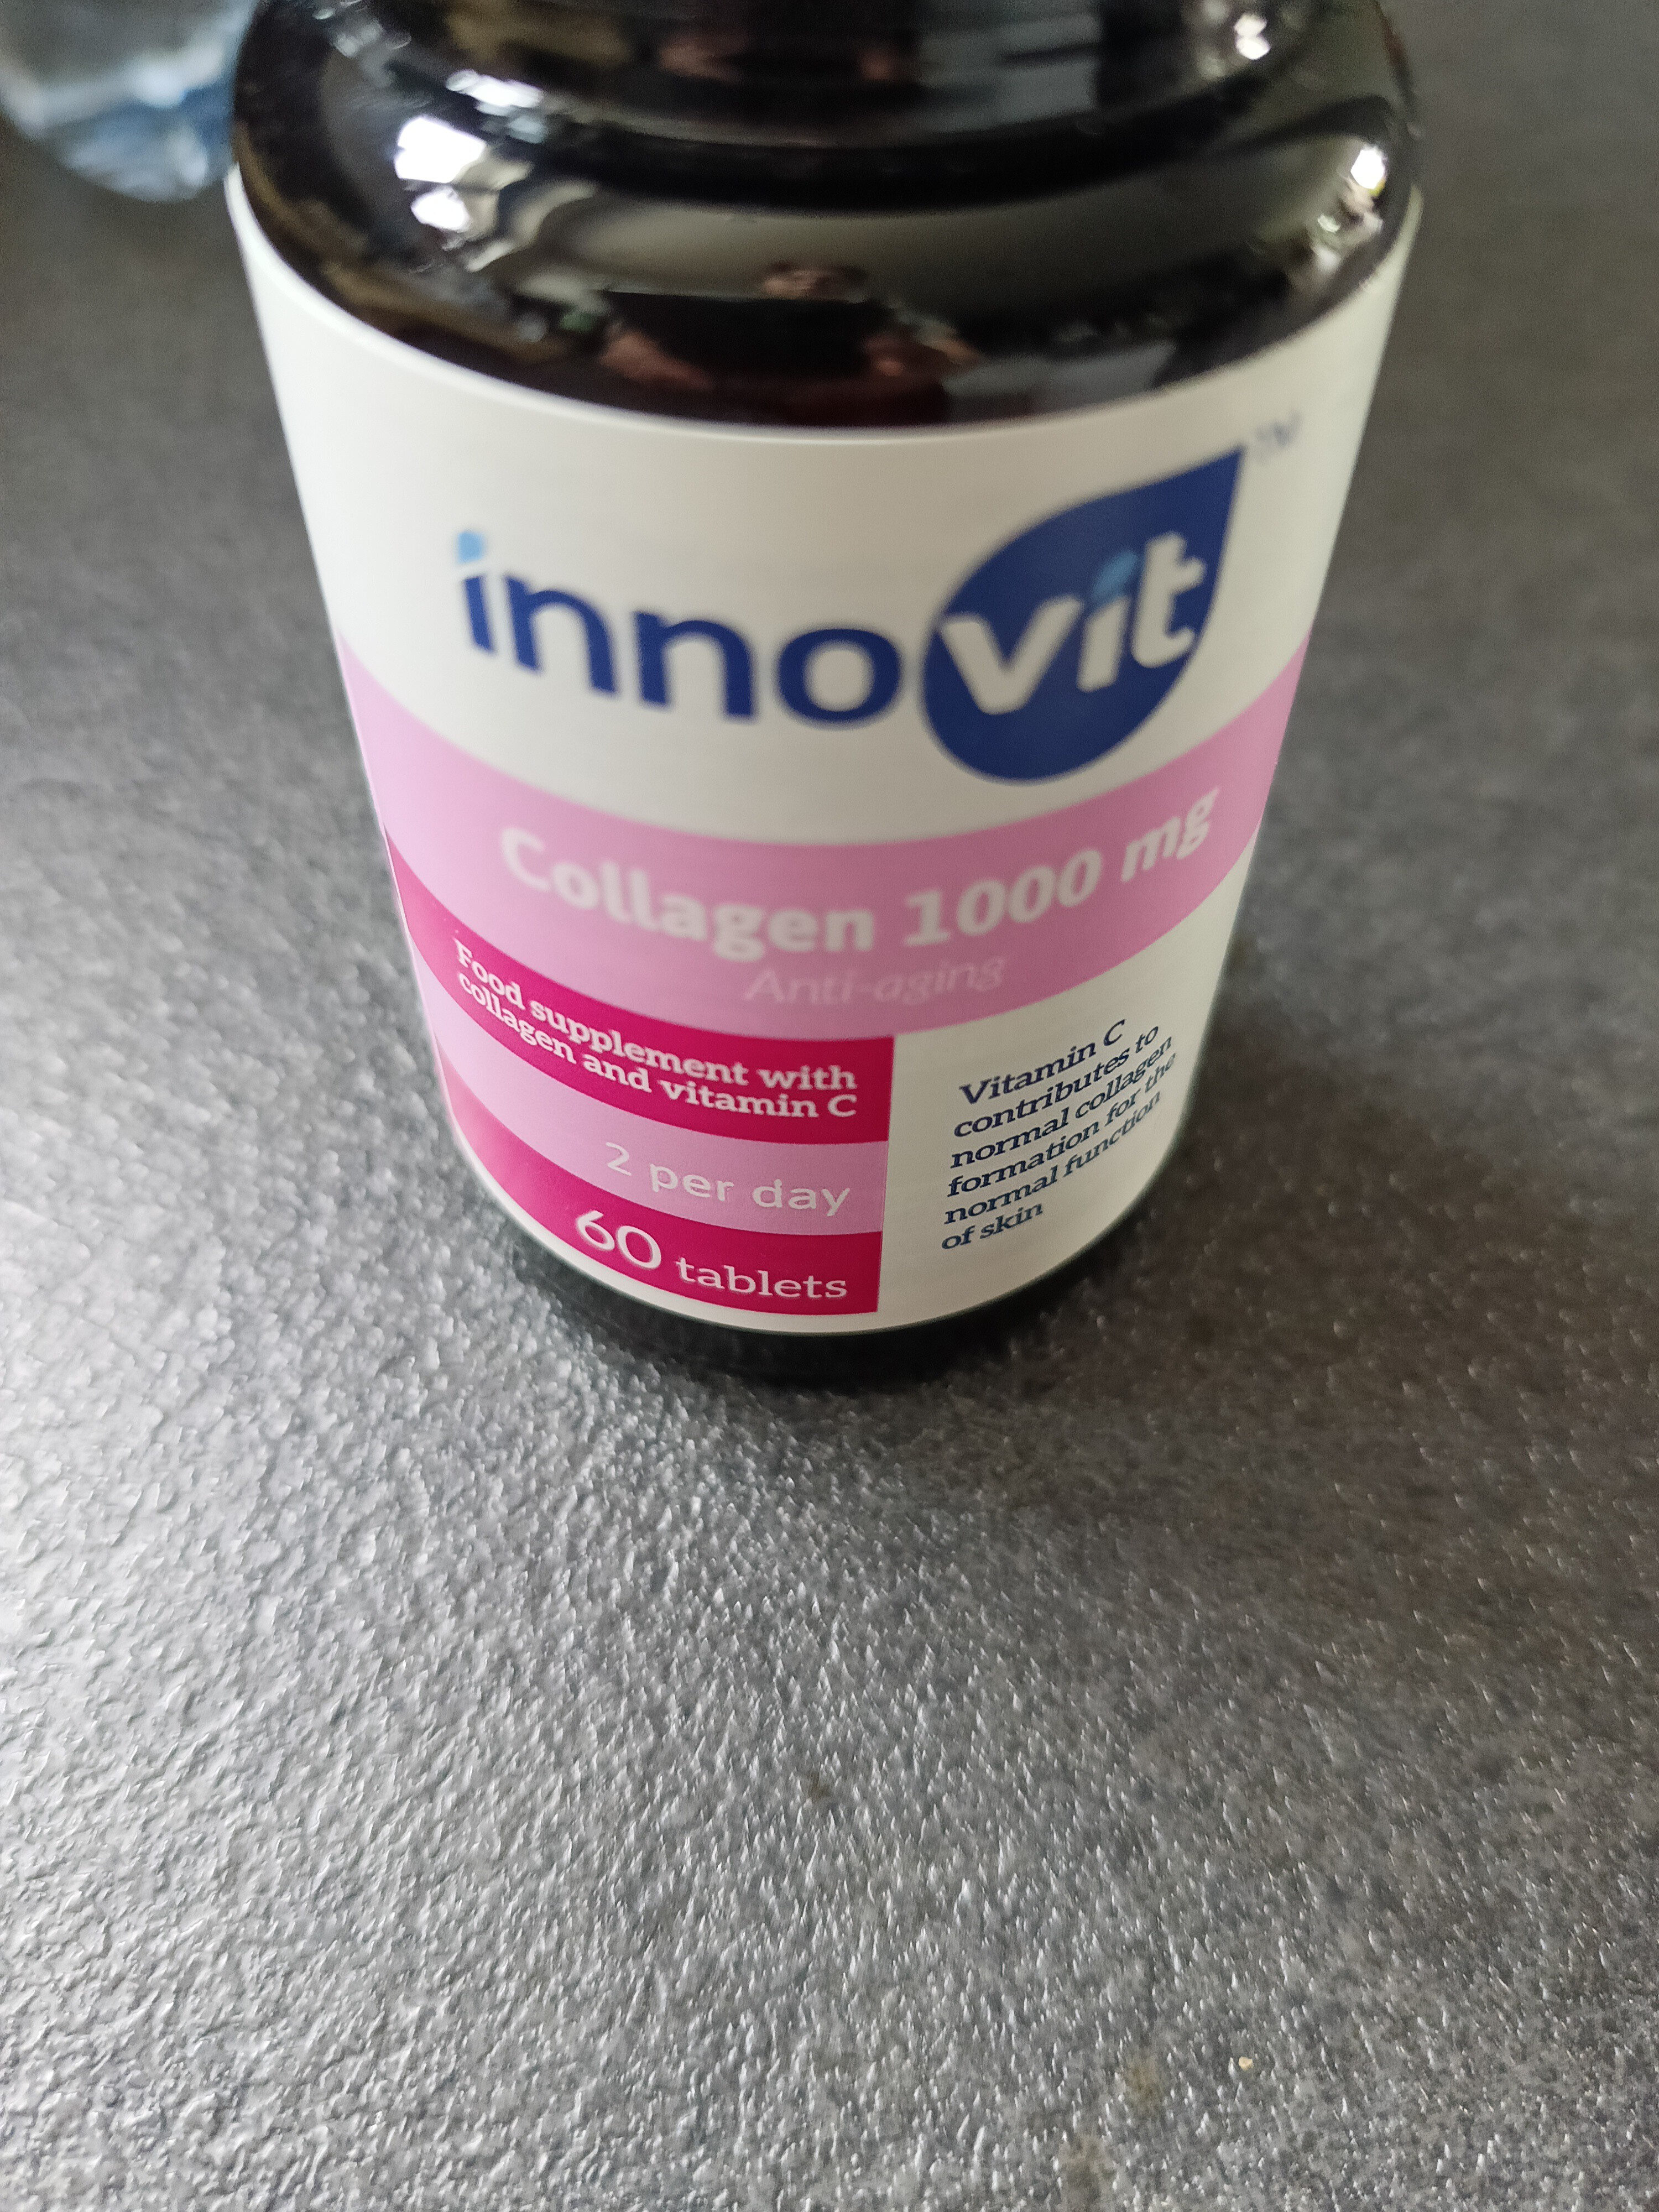 collagen 1000mg - Produkt - fr